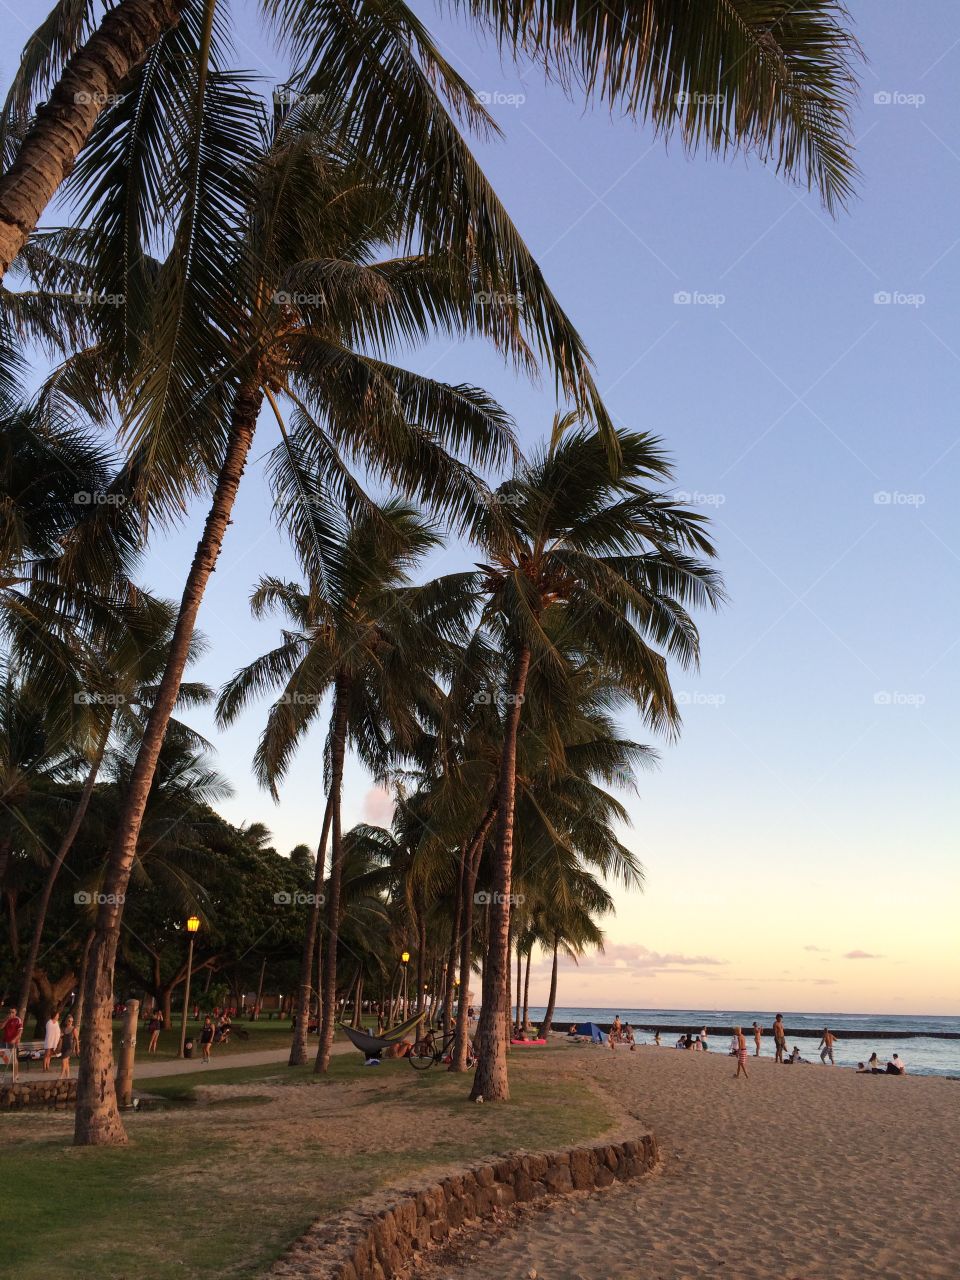 Coconut trees in Waikiki, Honolulu 